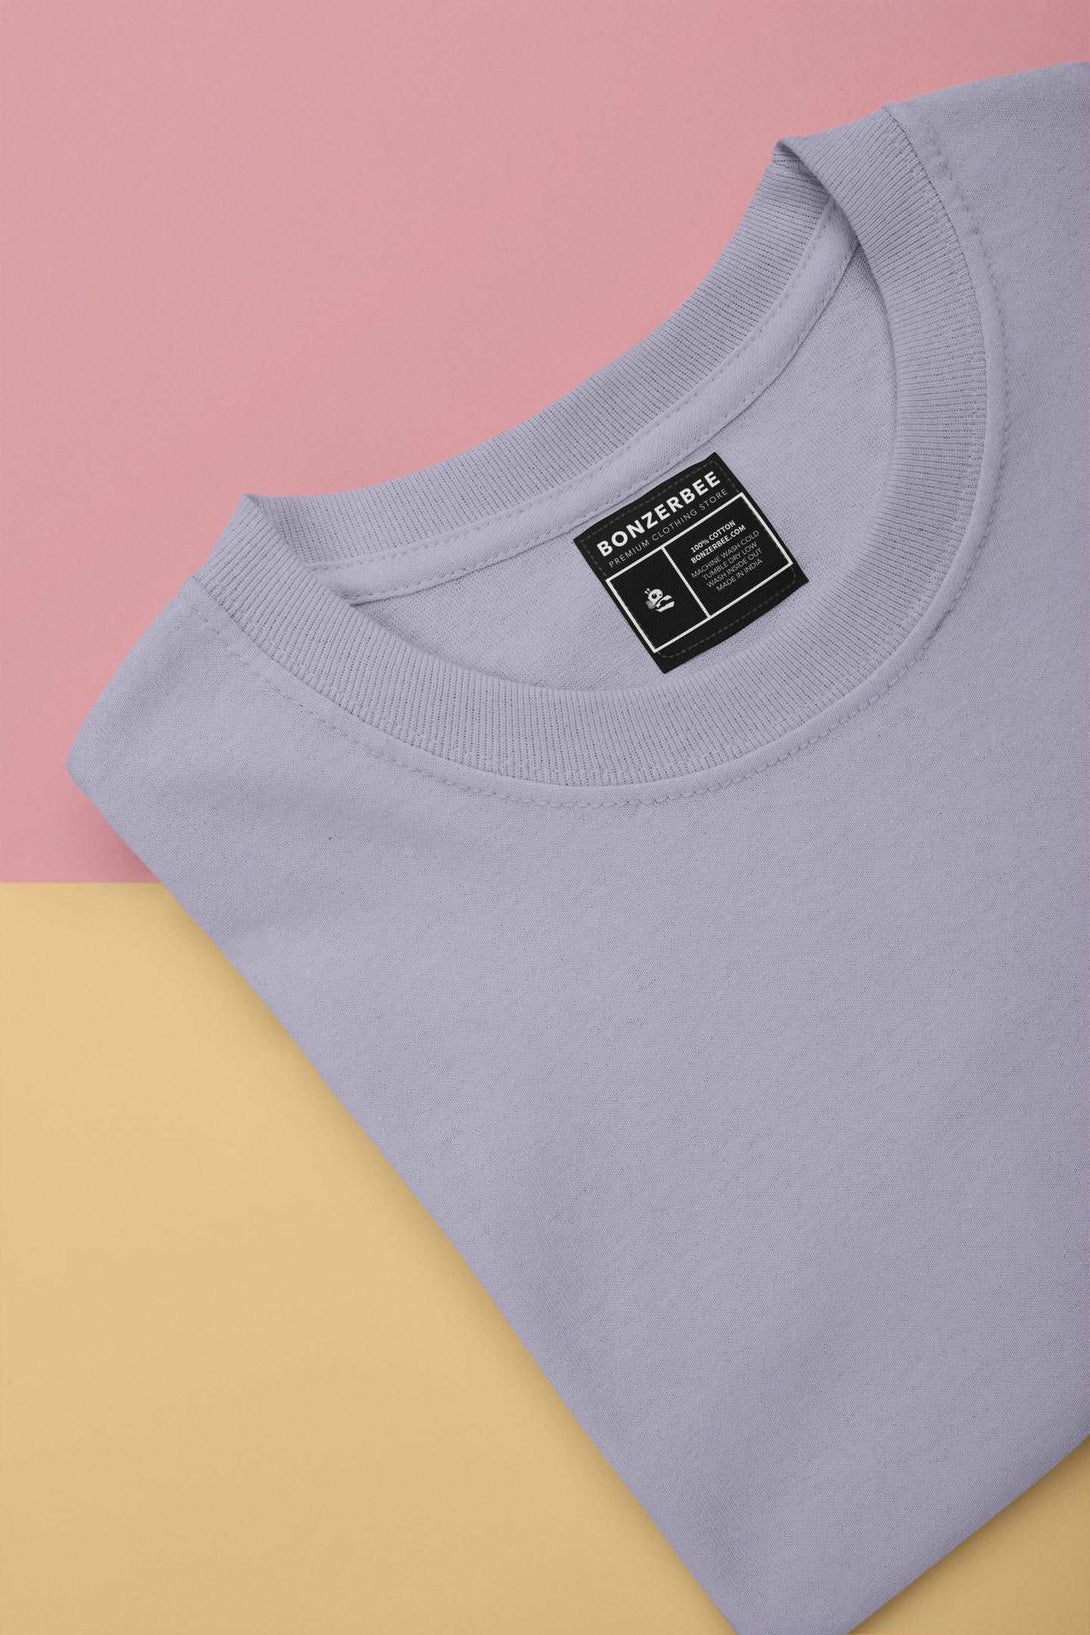 Lavender Color Half Sleeve T-shirt